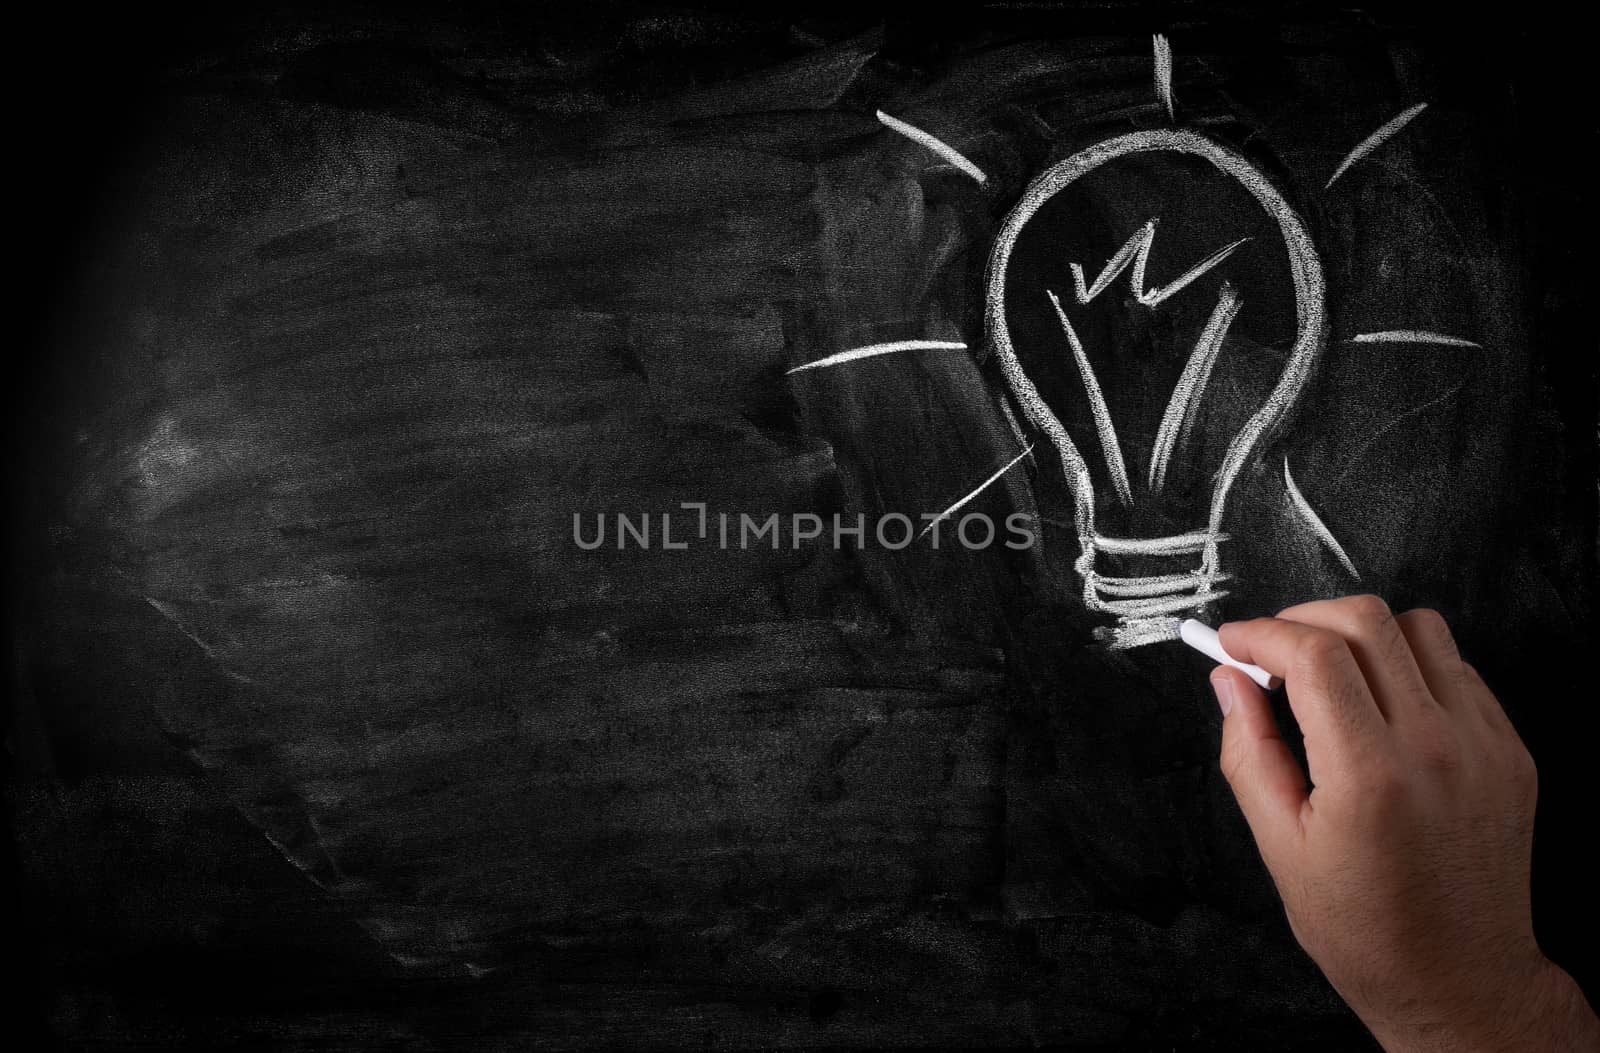 lightbulb drawn on the blackboard by sergii_gnatiuk